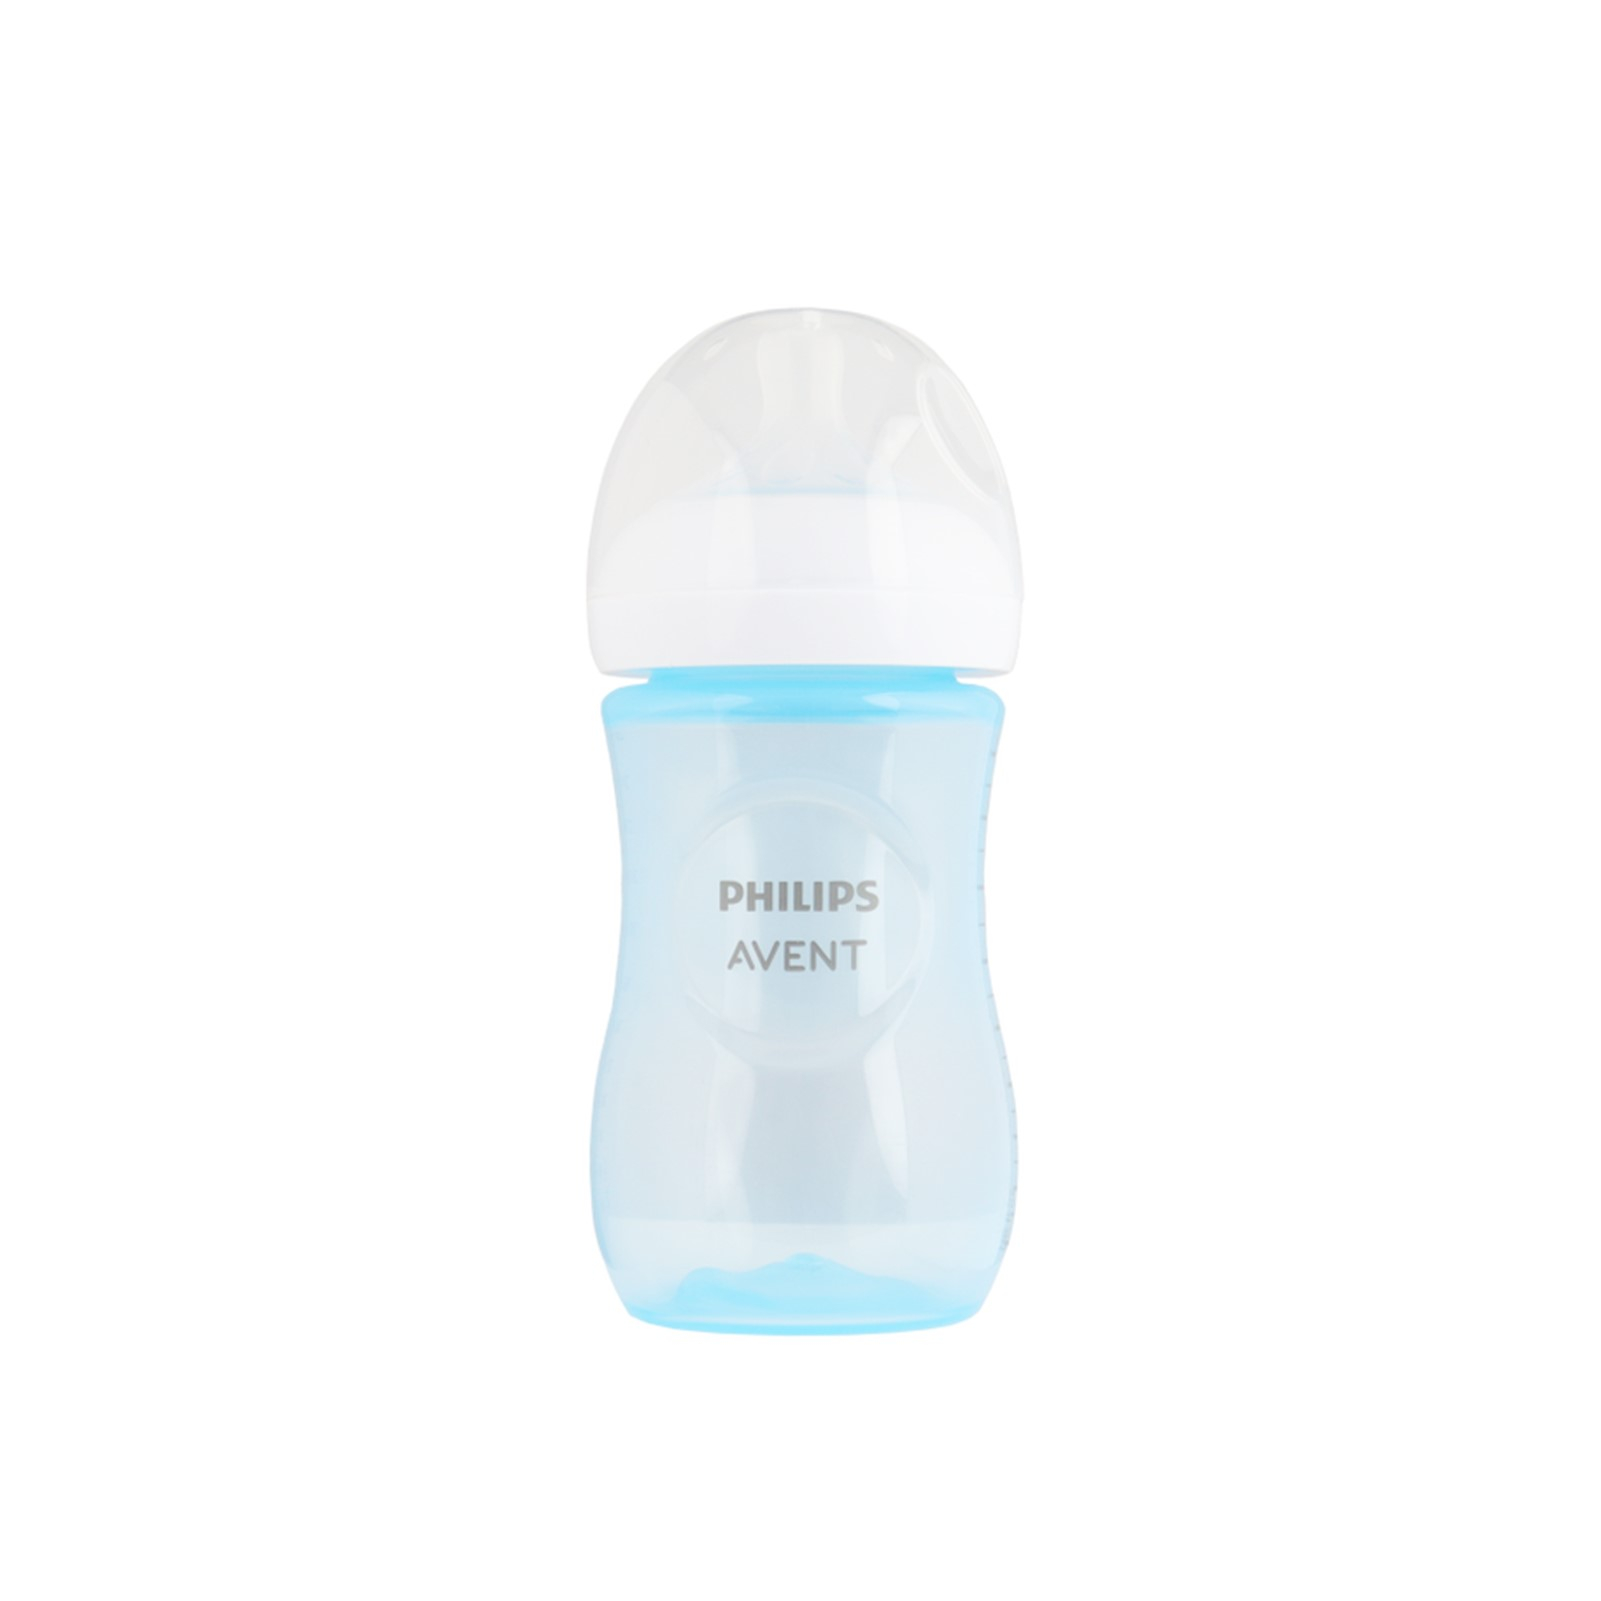 Philips Avent Natural Response Bottle Blue 260ml 1m+